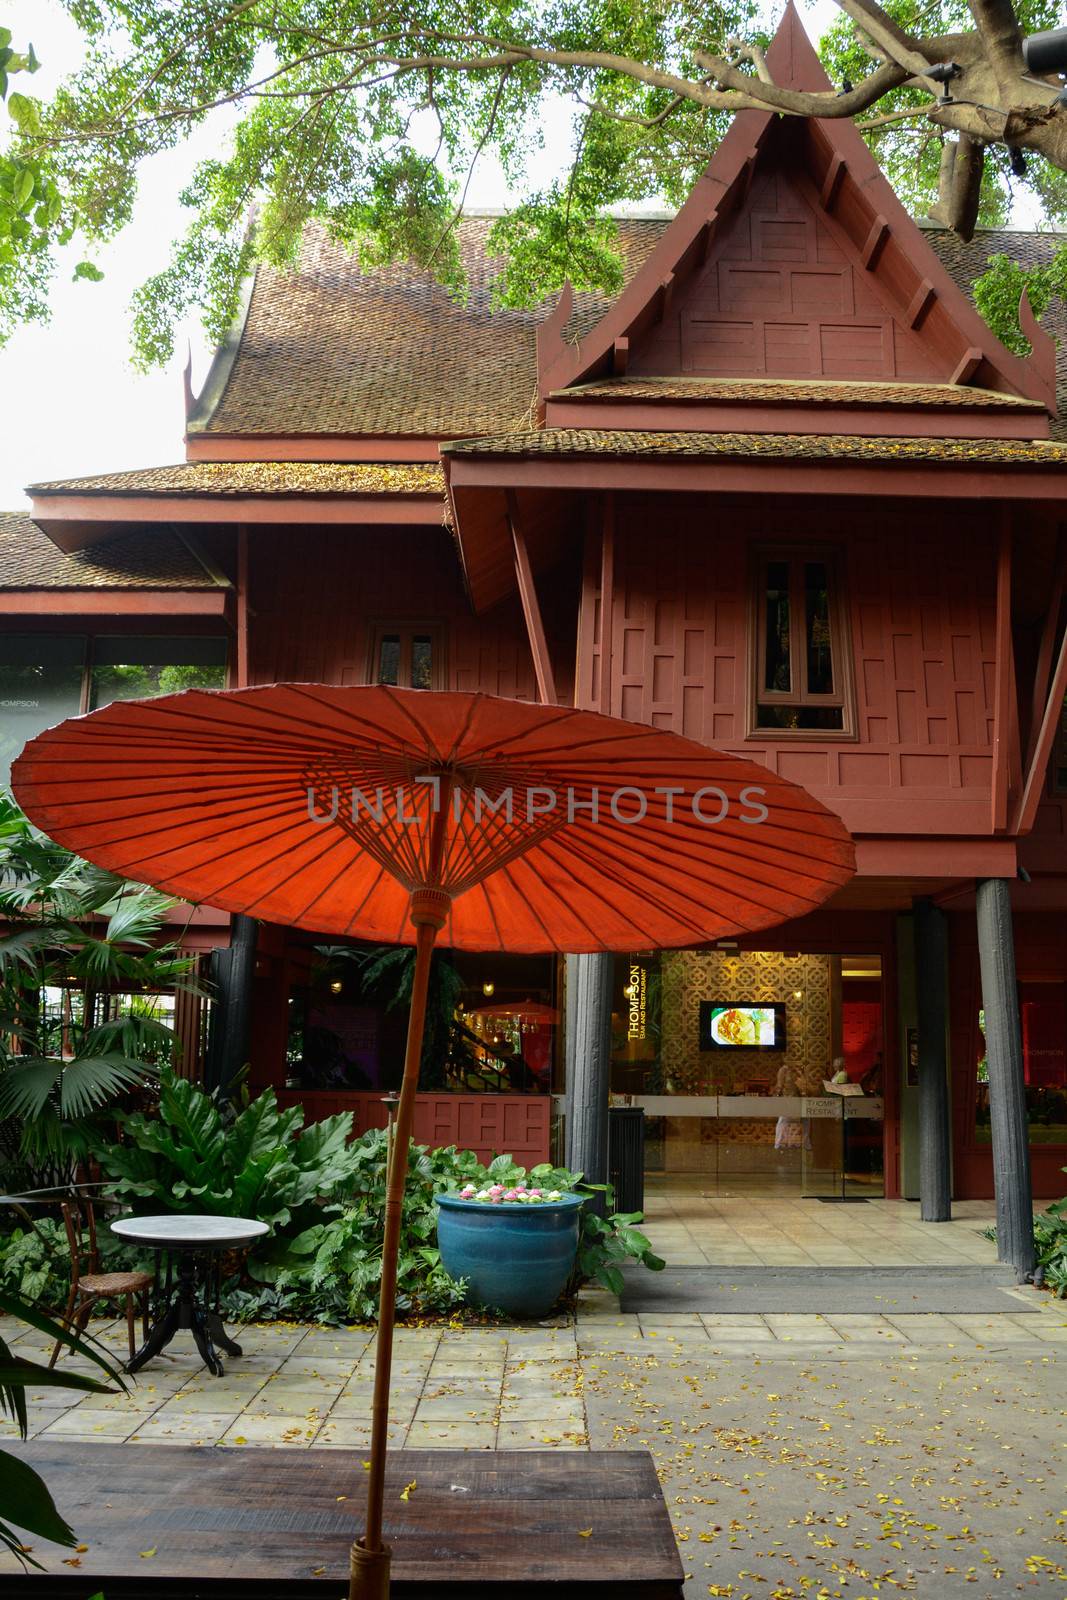 jim thompson house is thai house art style with orange Umbrella by frihuttaya